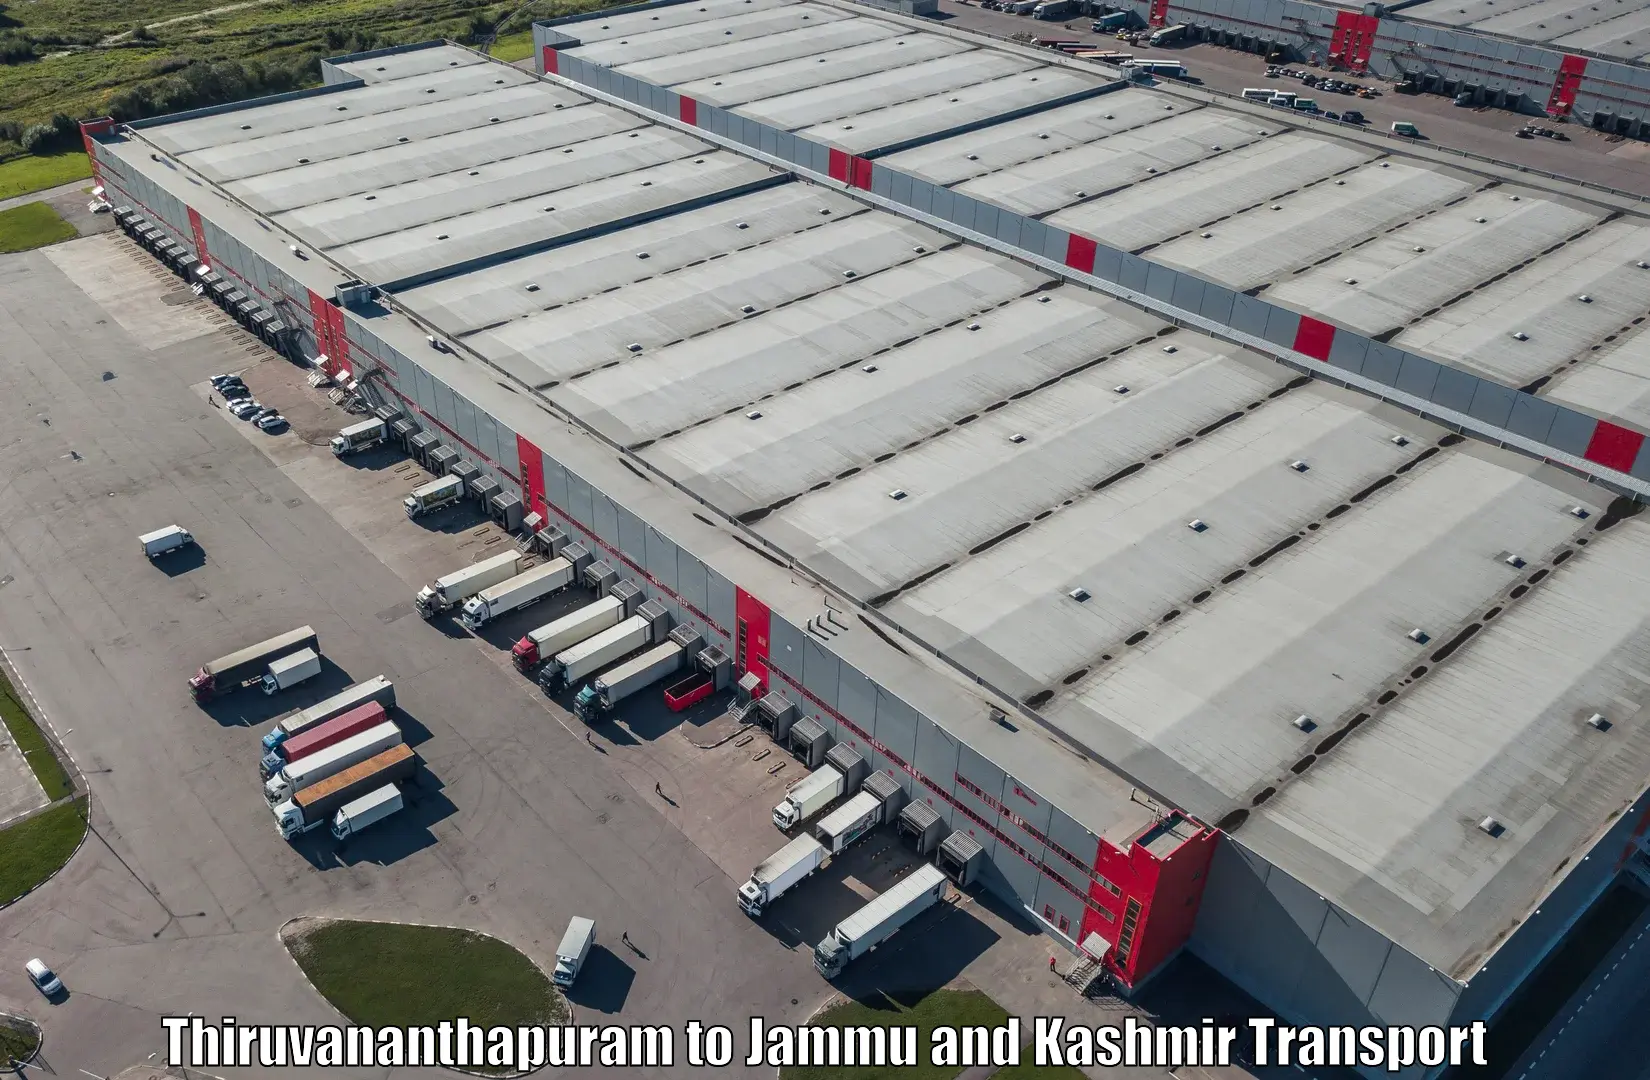 Truck transport companies in India in Thiruvananthapuram to Shopian